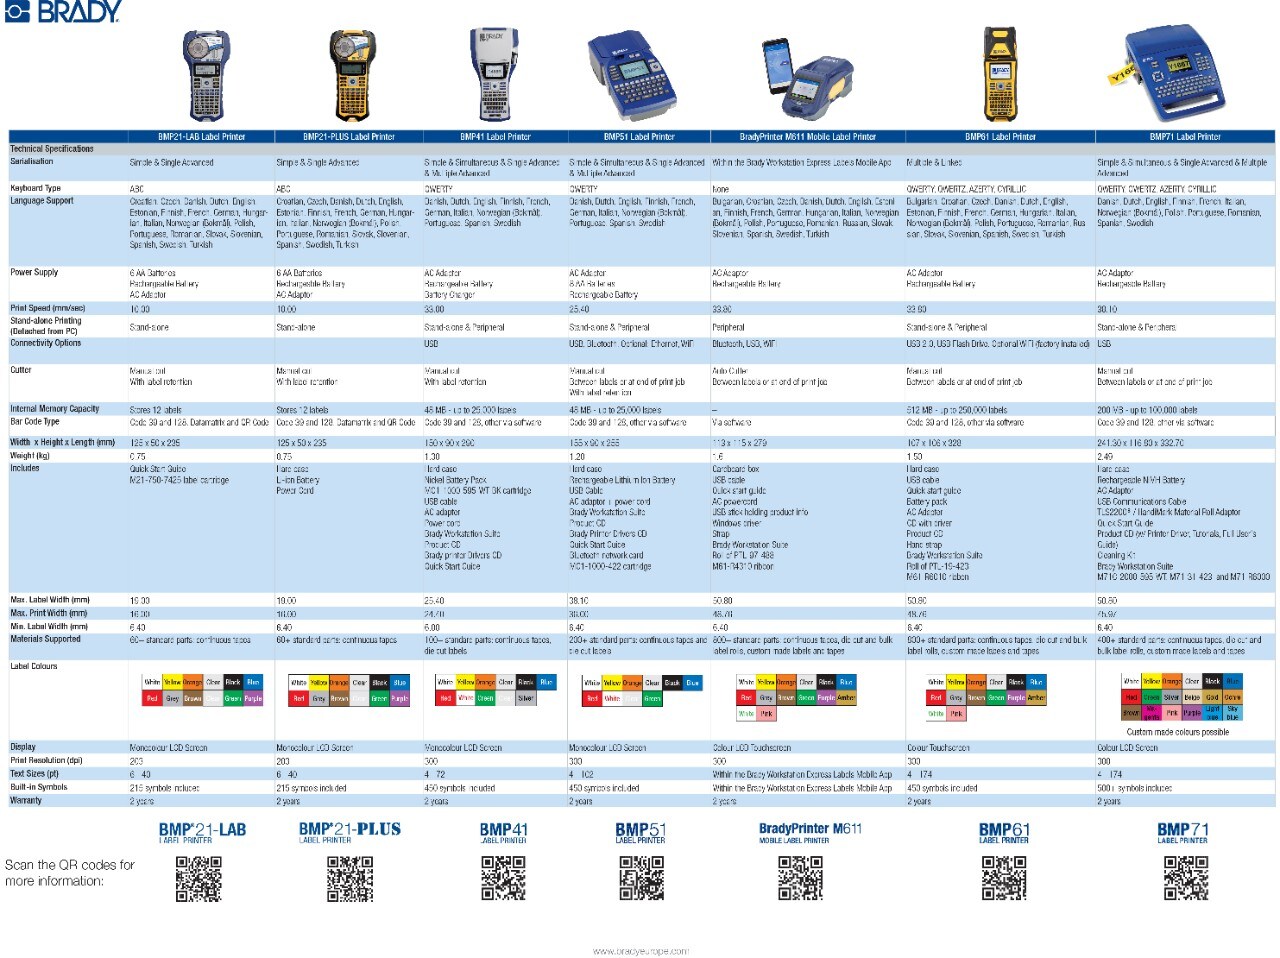 13759_Brady_Mobile_Printer_Selection_Guide_Europe_English.pdf